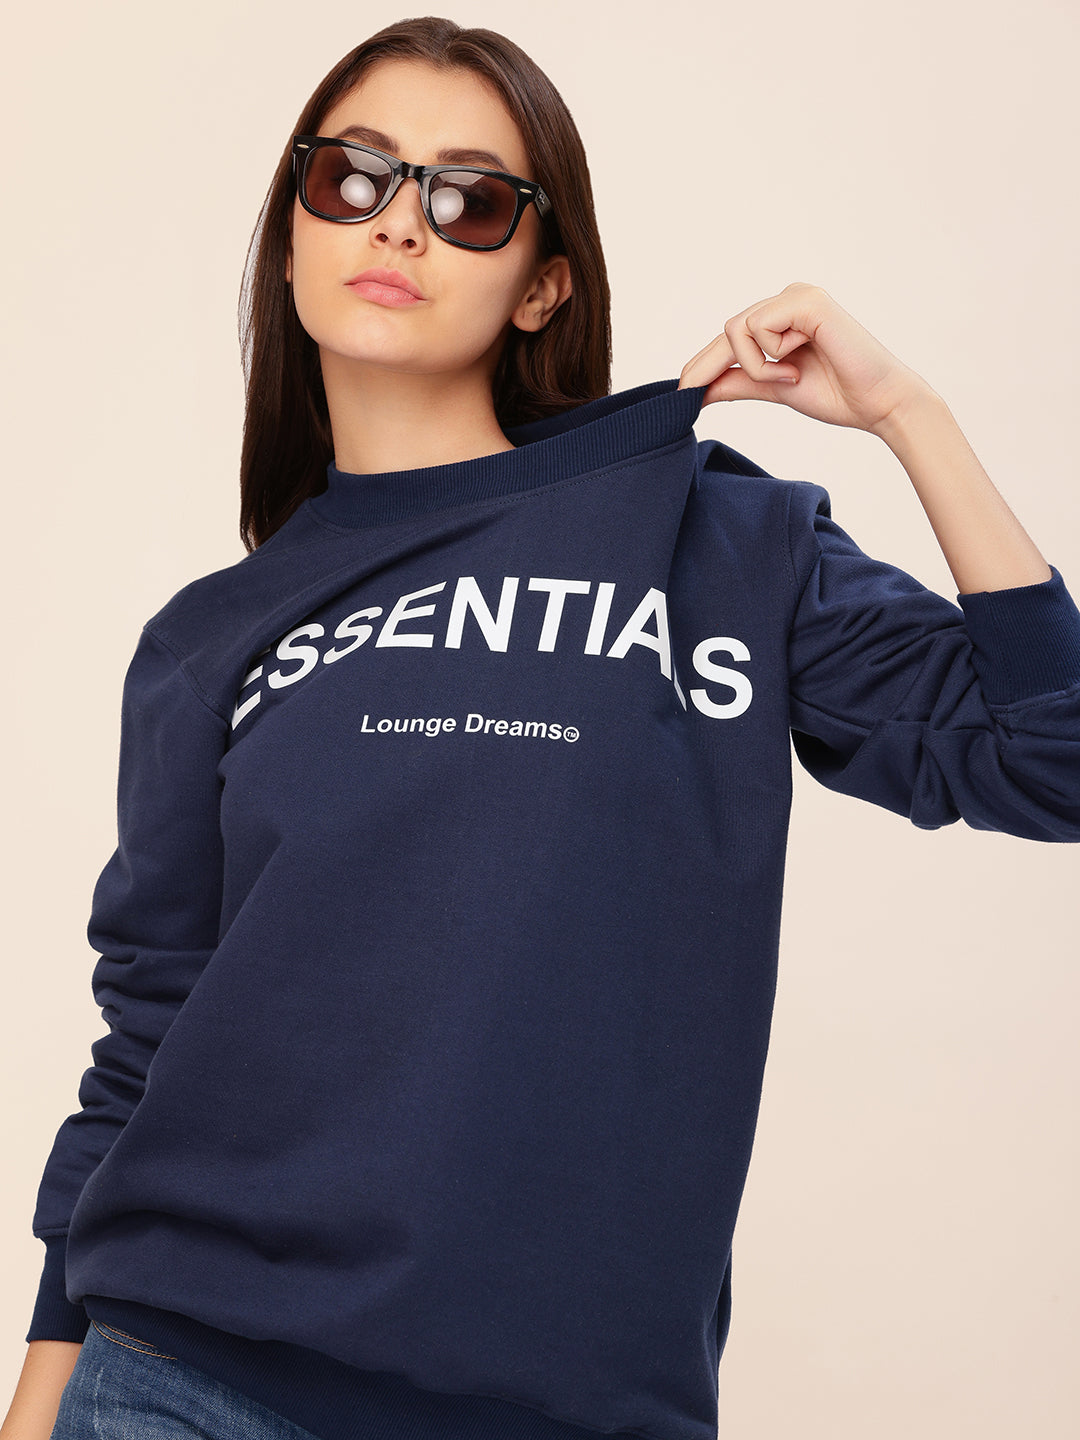 Essentials Navy Printed Sweatshirt